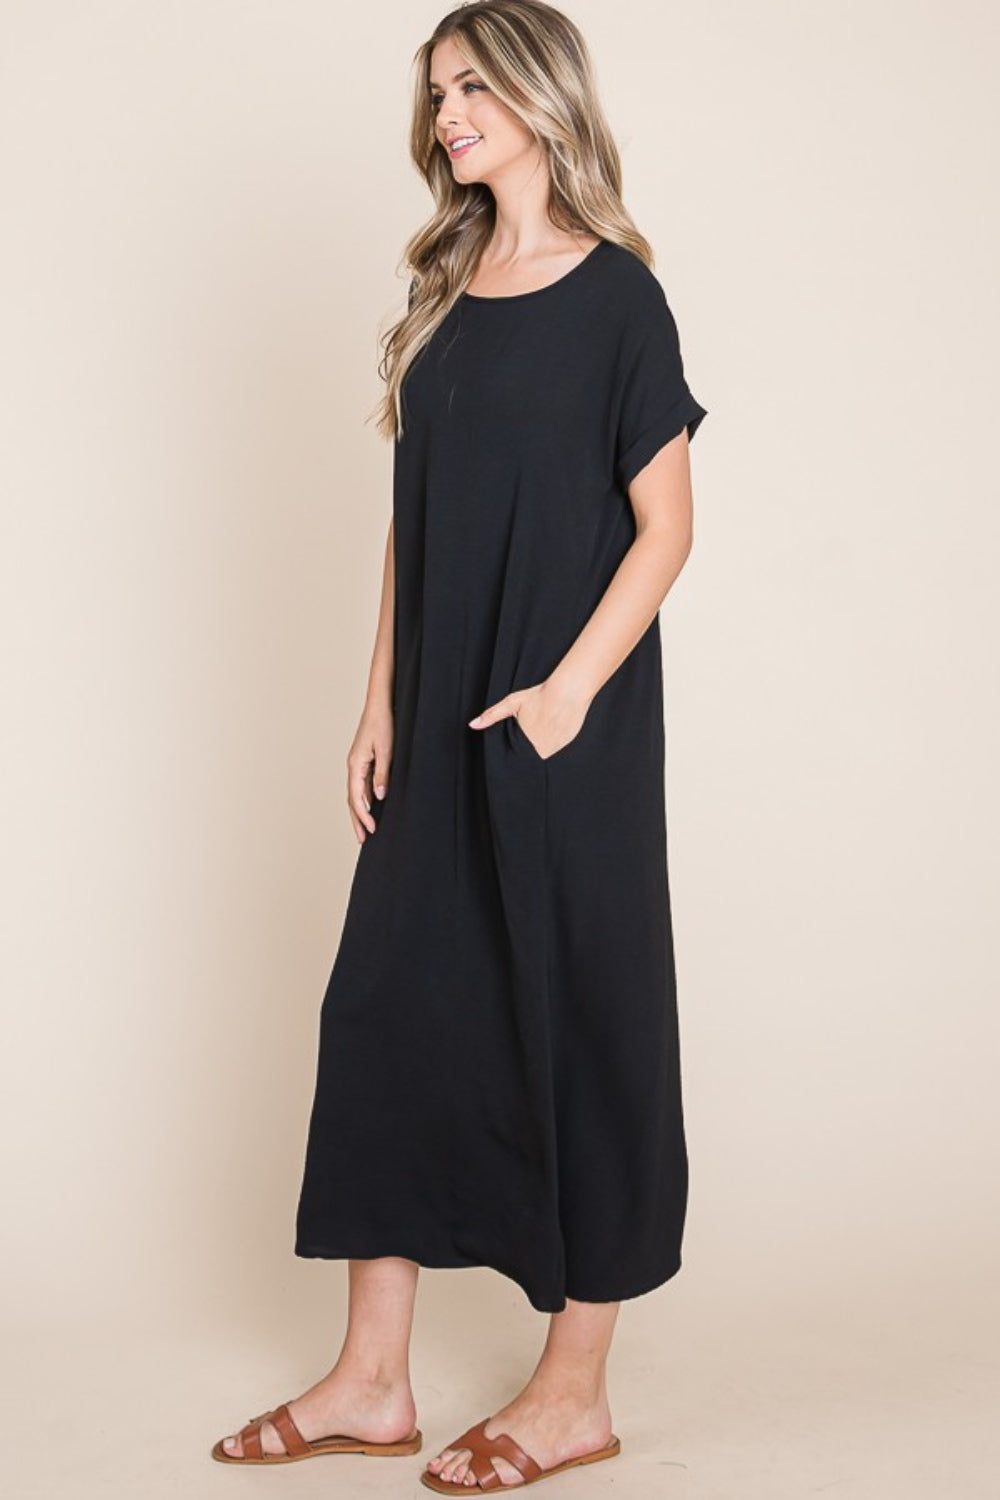 Black Round Neck Short Sleeve Midi Dress with Pockets